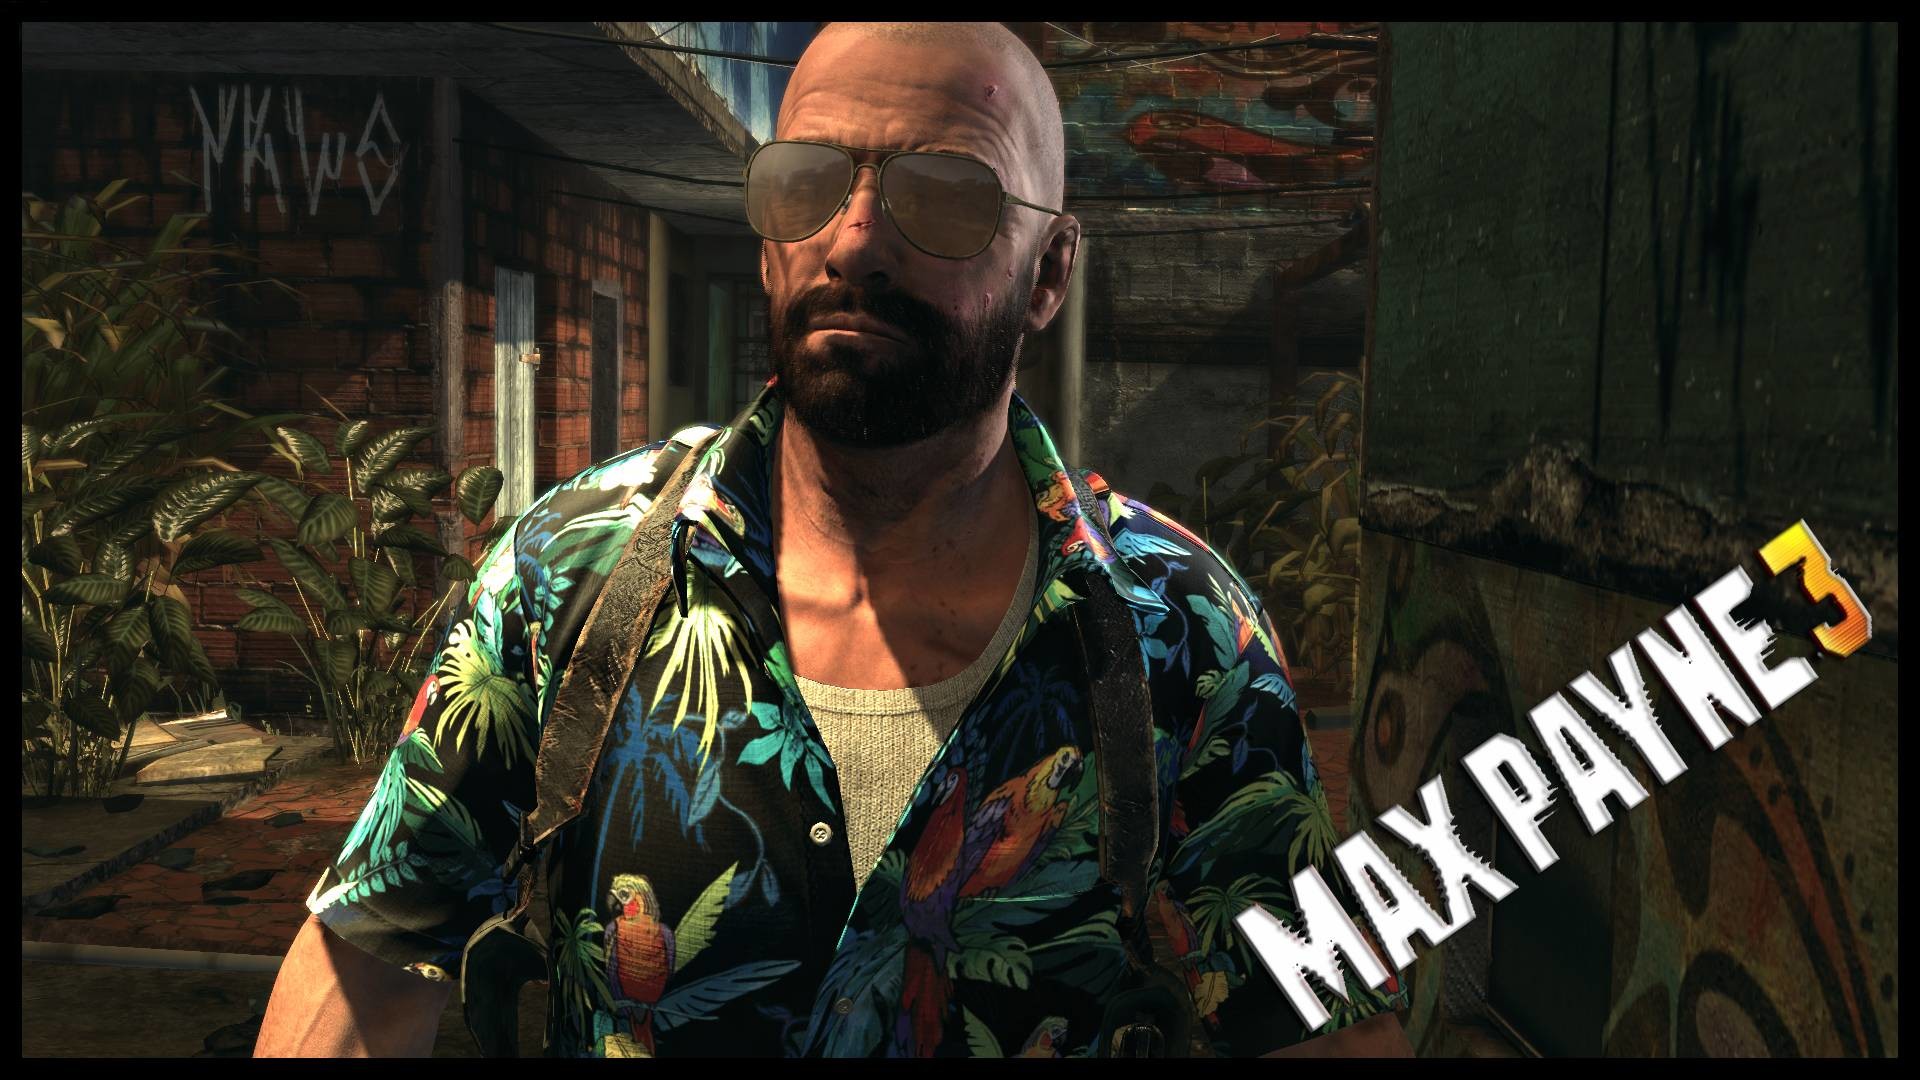 1920x1080 Wallpaper HD Max Payne 3 (PC, PlayStation 3, Xbox 360) / RockStar